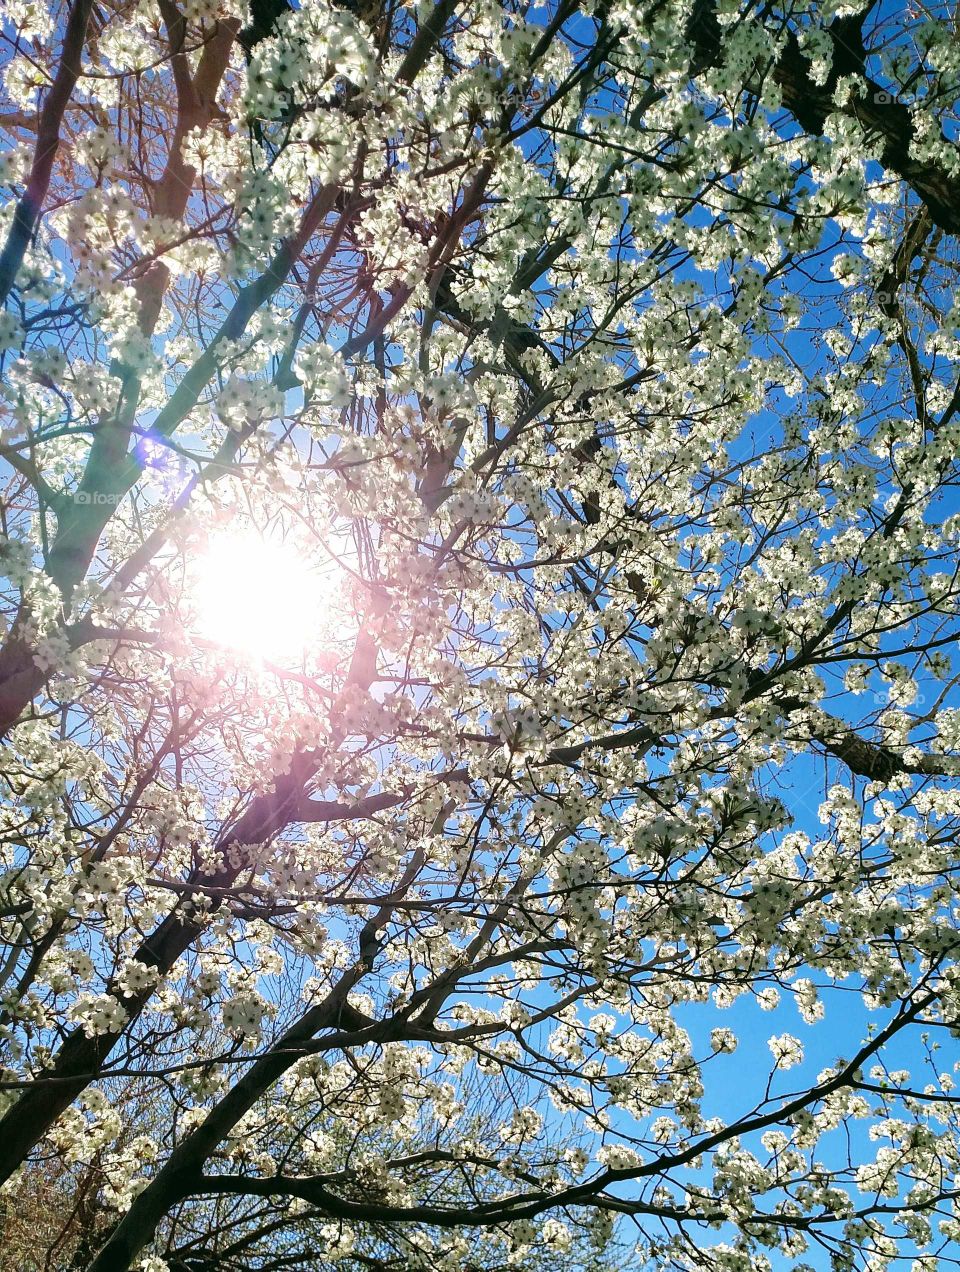 Through the blossoms